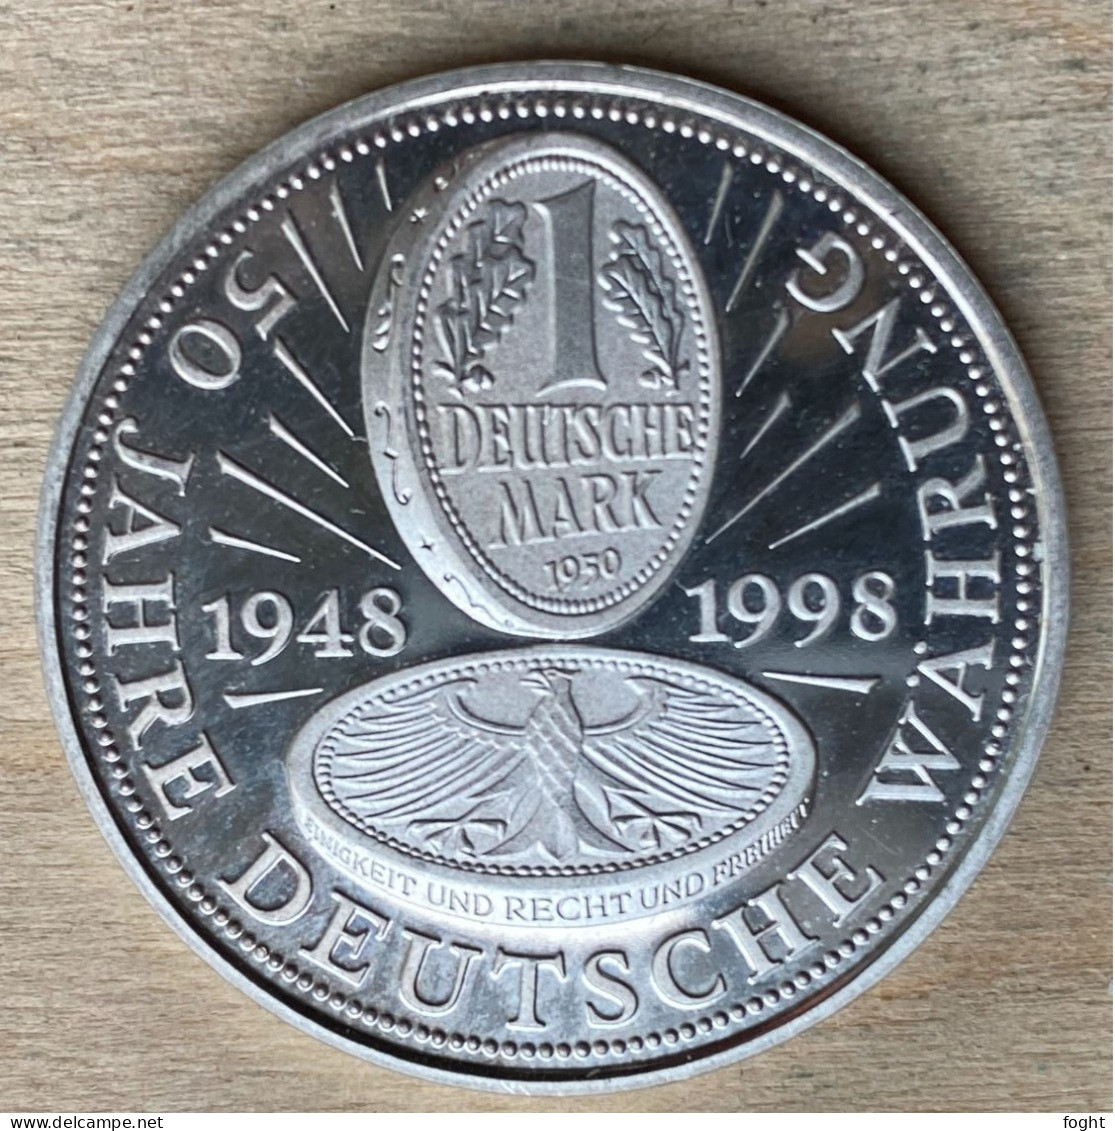 1998 Germany /BRD Medaille  50 Jahre Deutsche Währung .500 Silber,PP,7225 - Professionnels/De Société